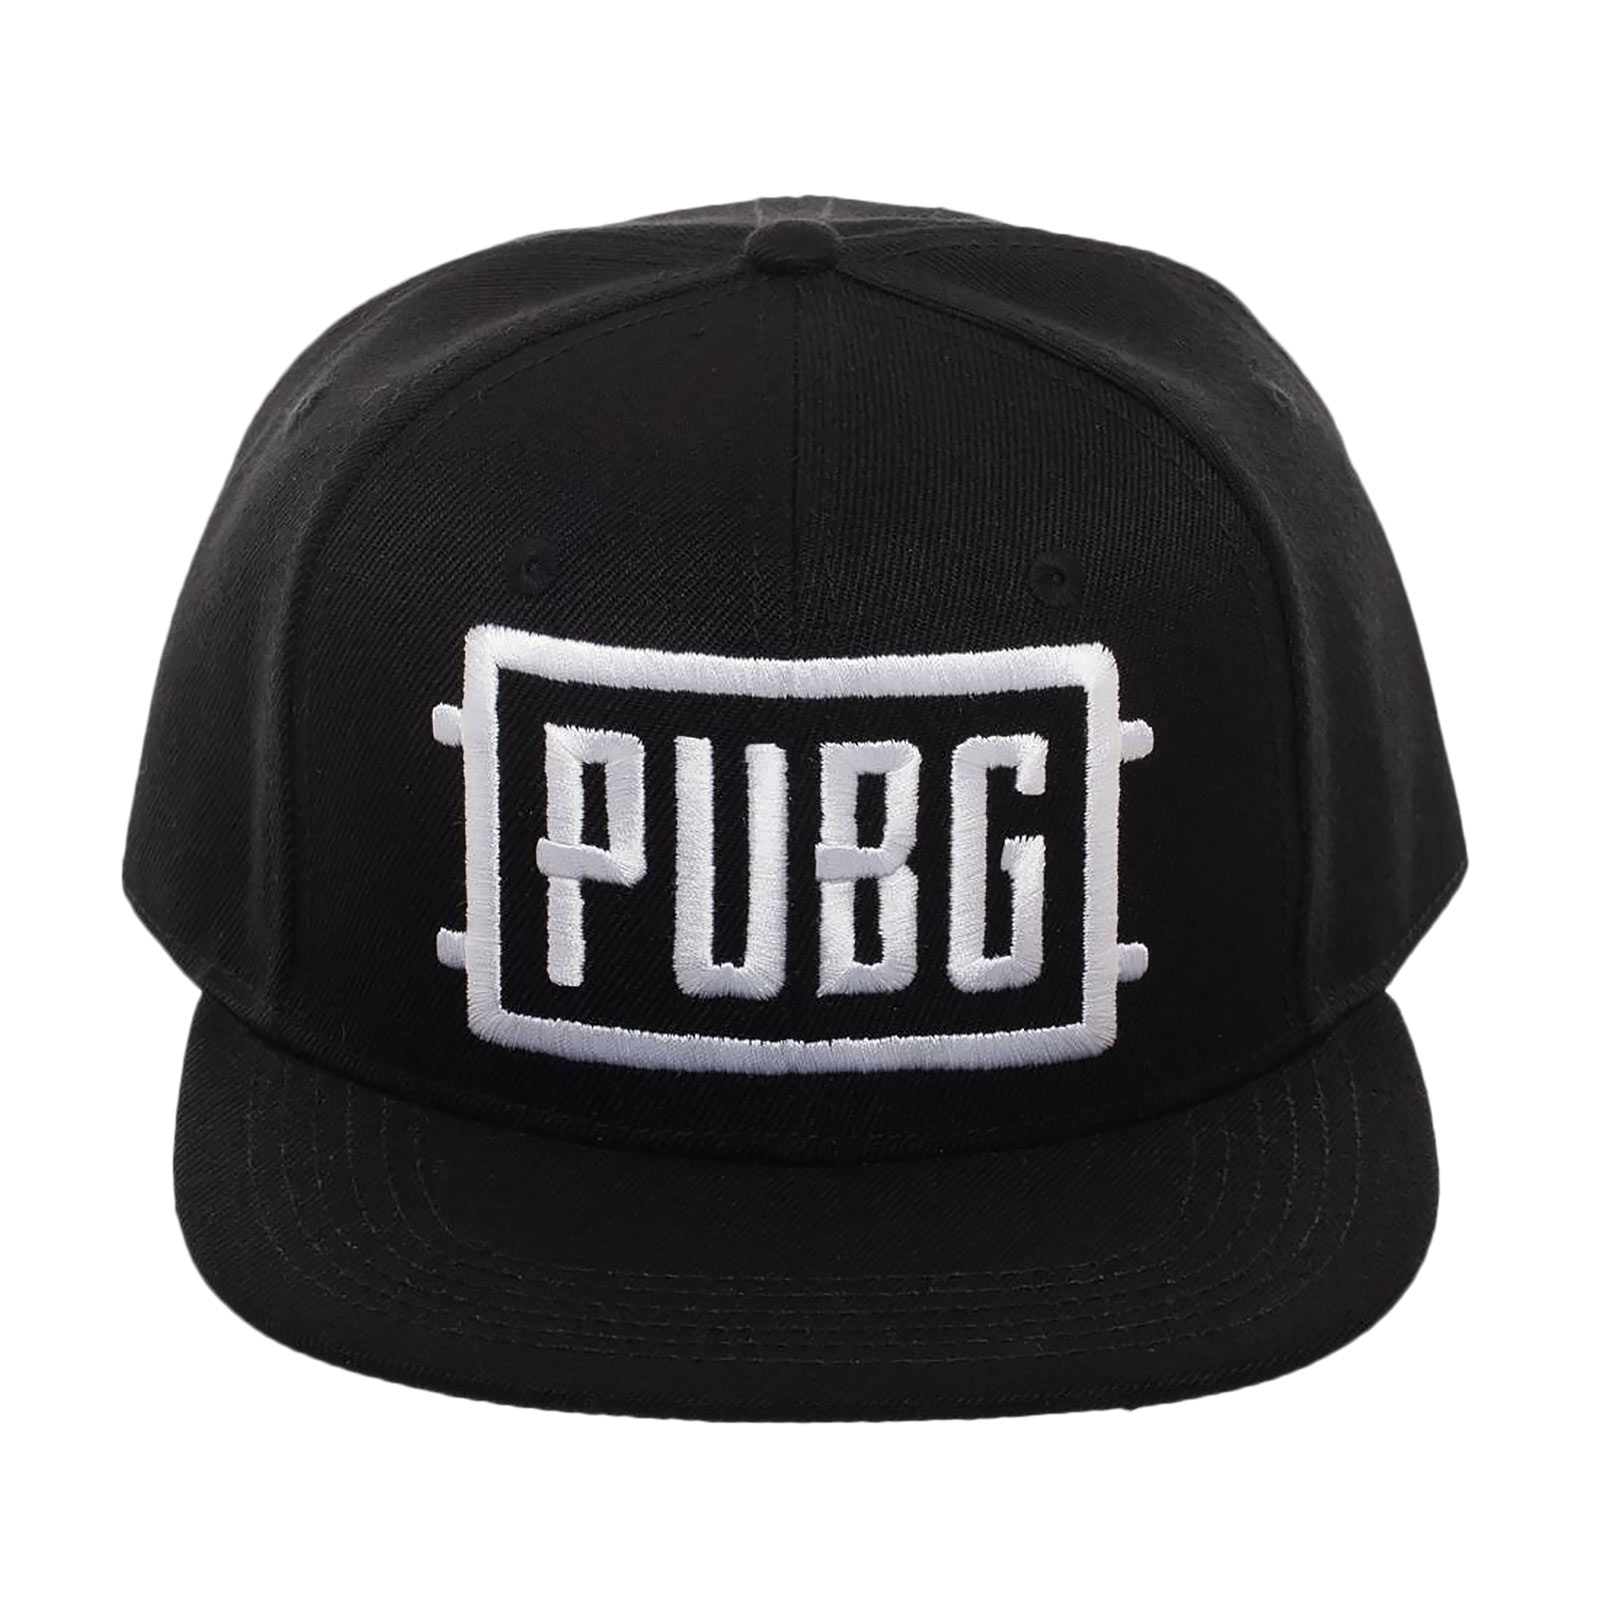 PUBG - Logo Snapback Cap